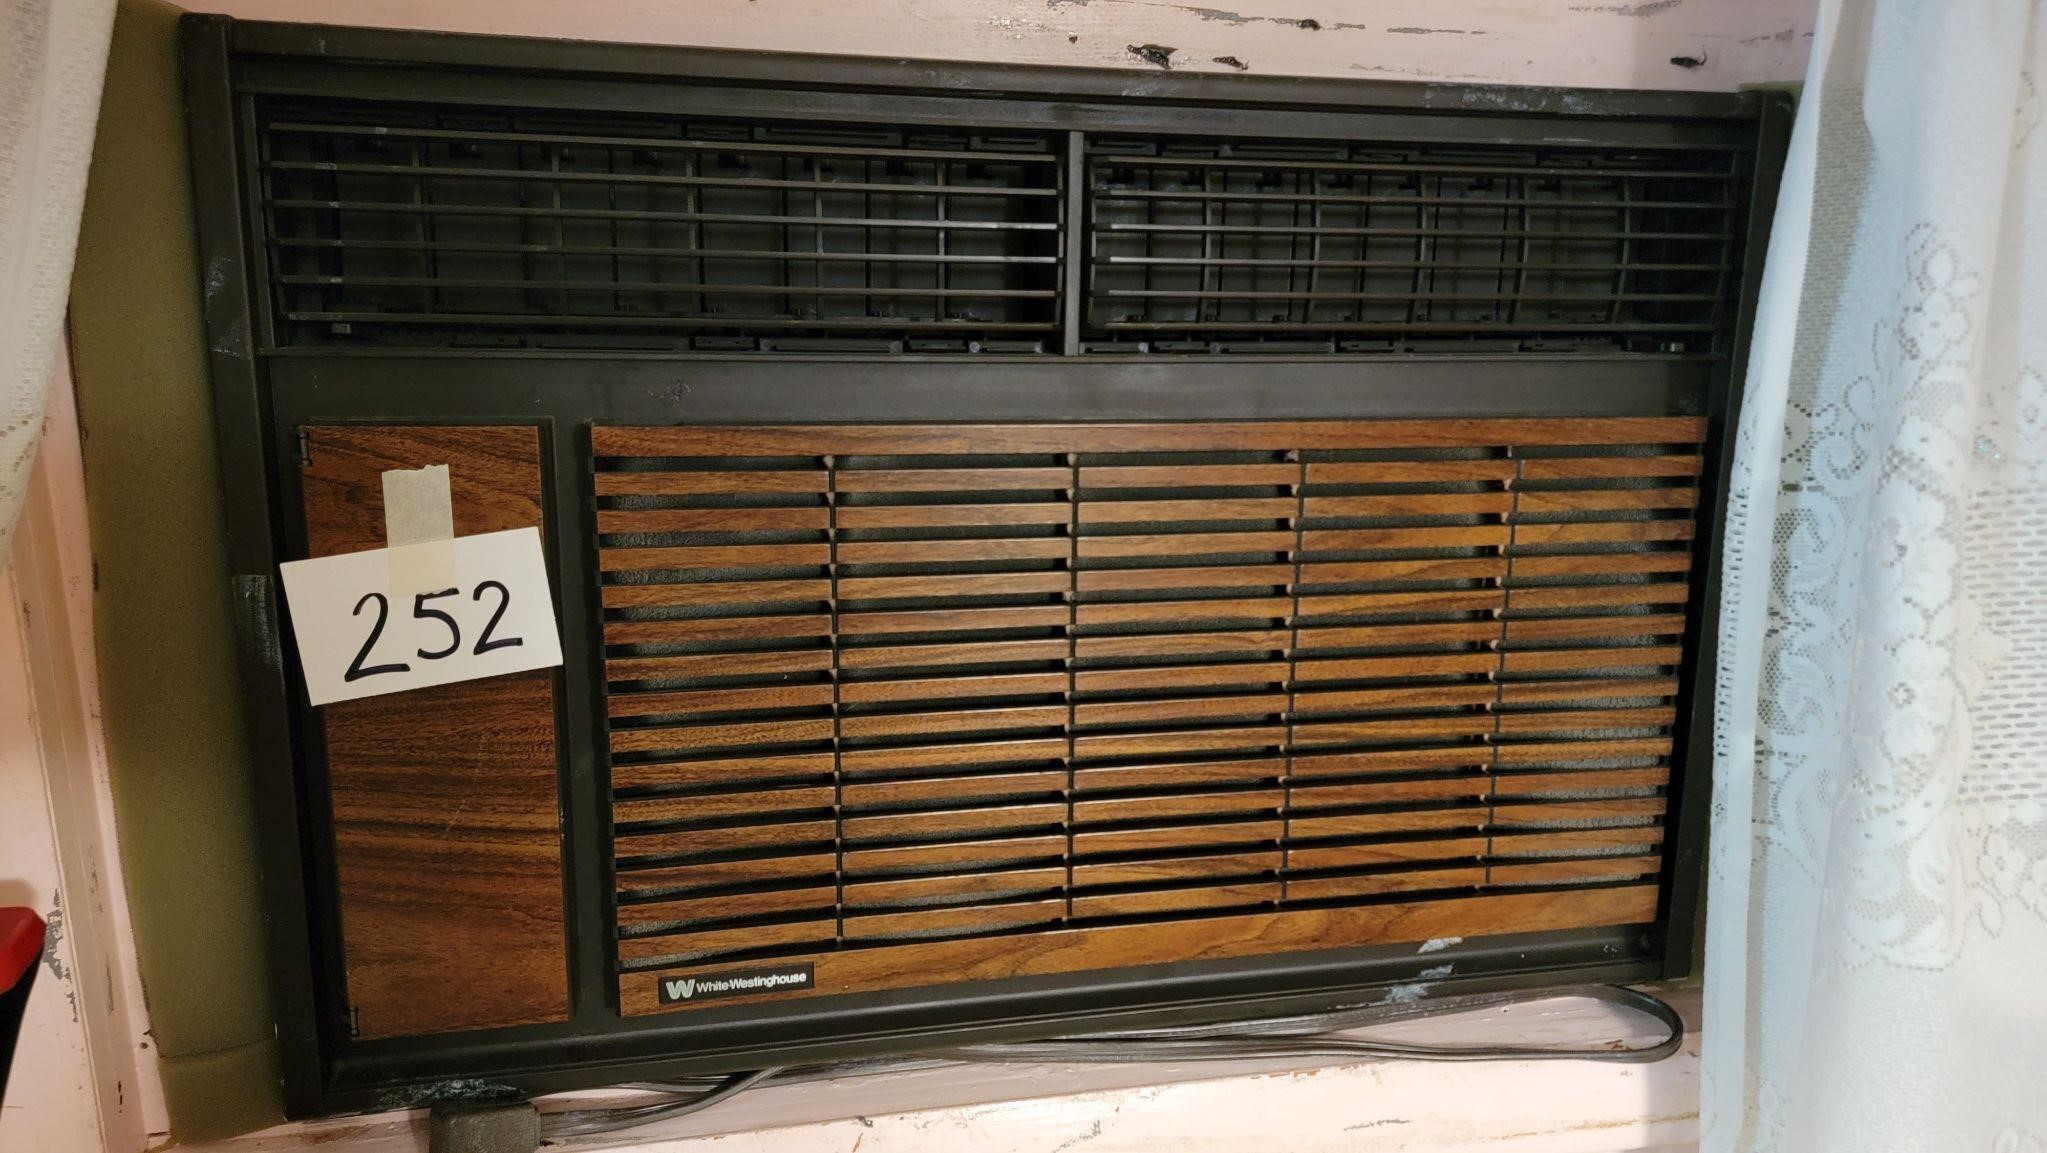 Older Large Air Conditioner